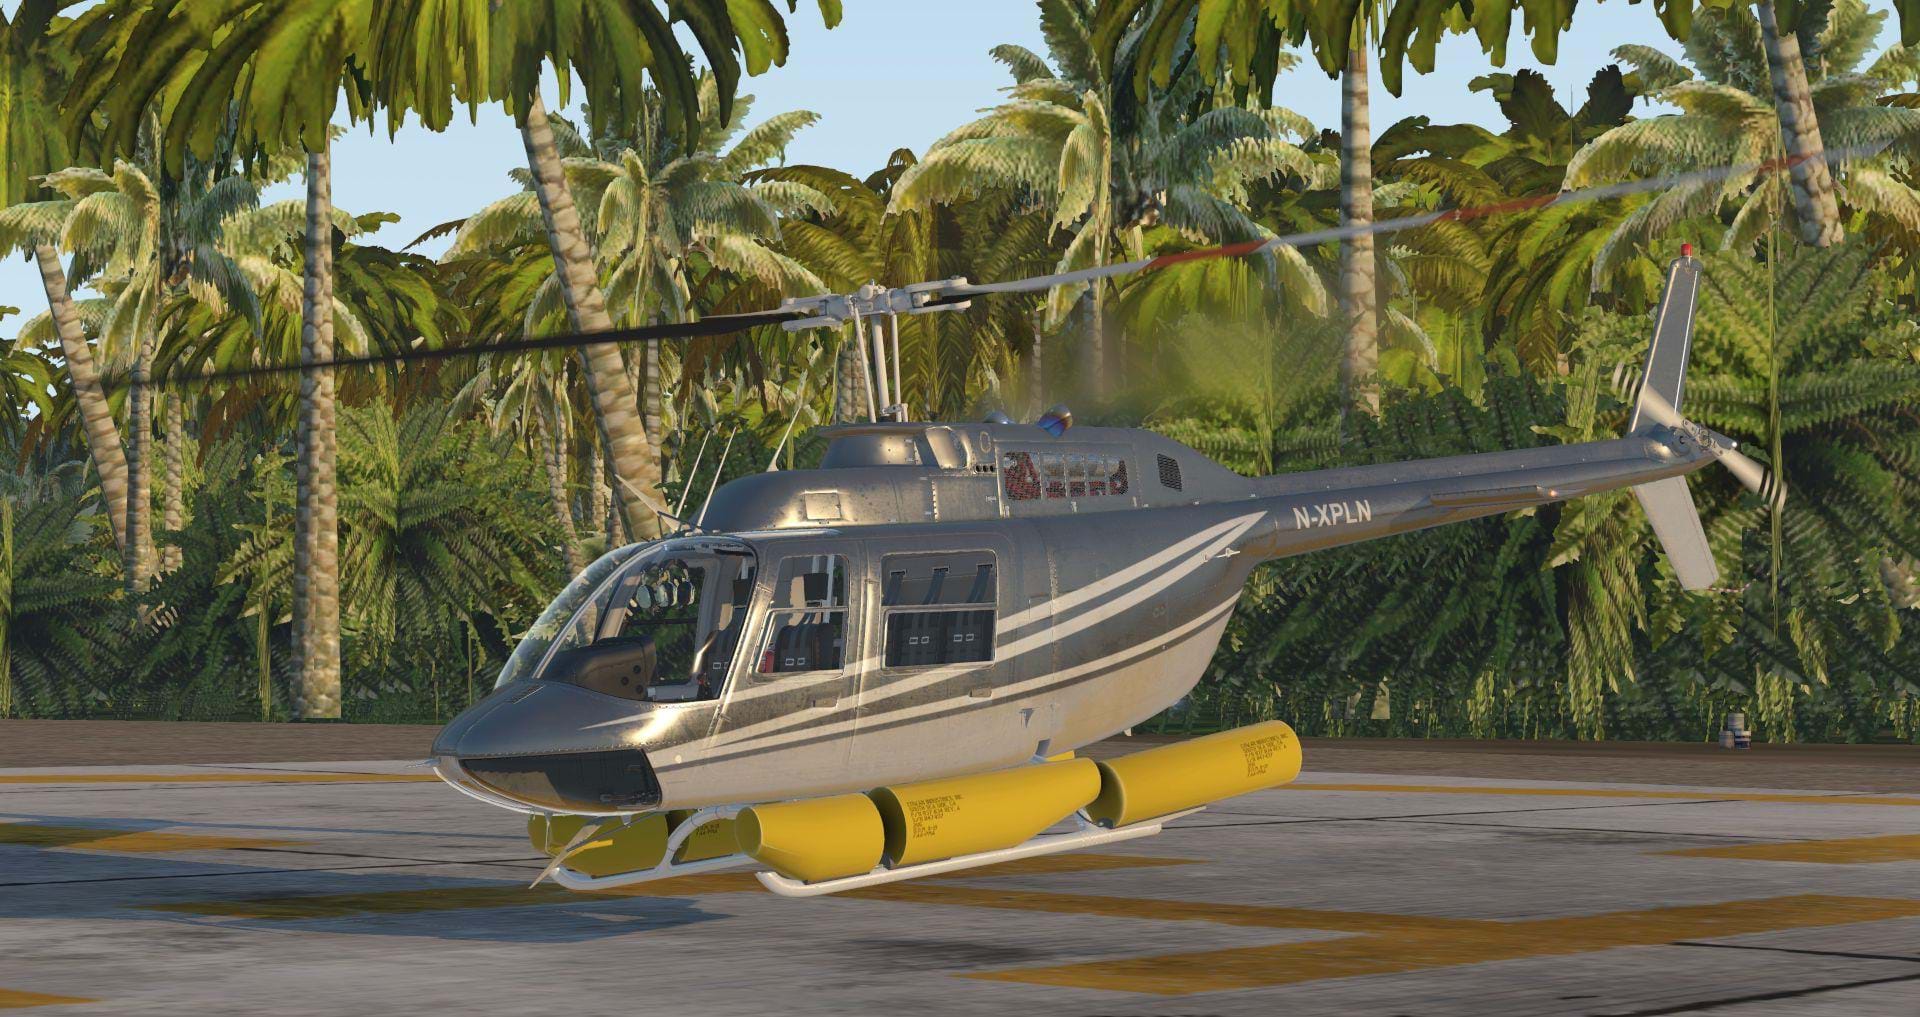 Cowan Simulation Bell 206 JetRanger for X-Plane